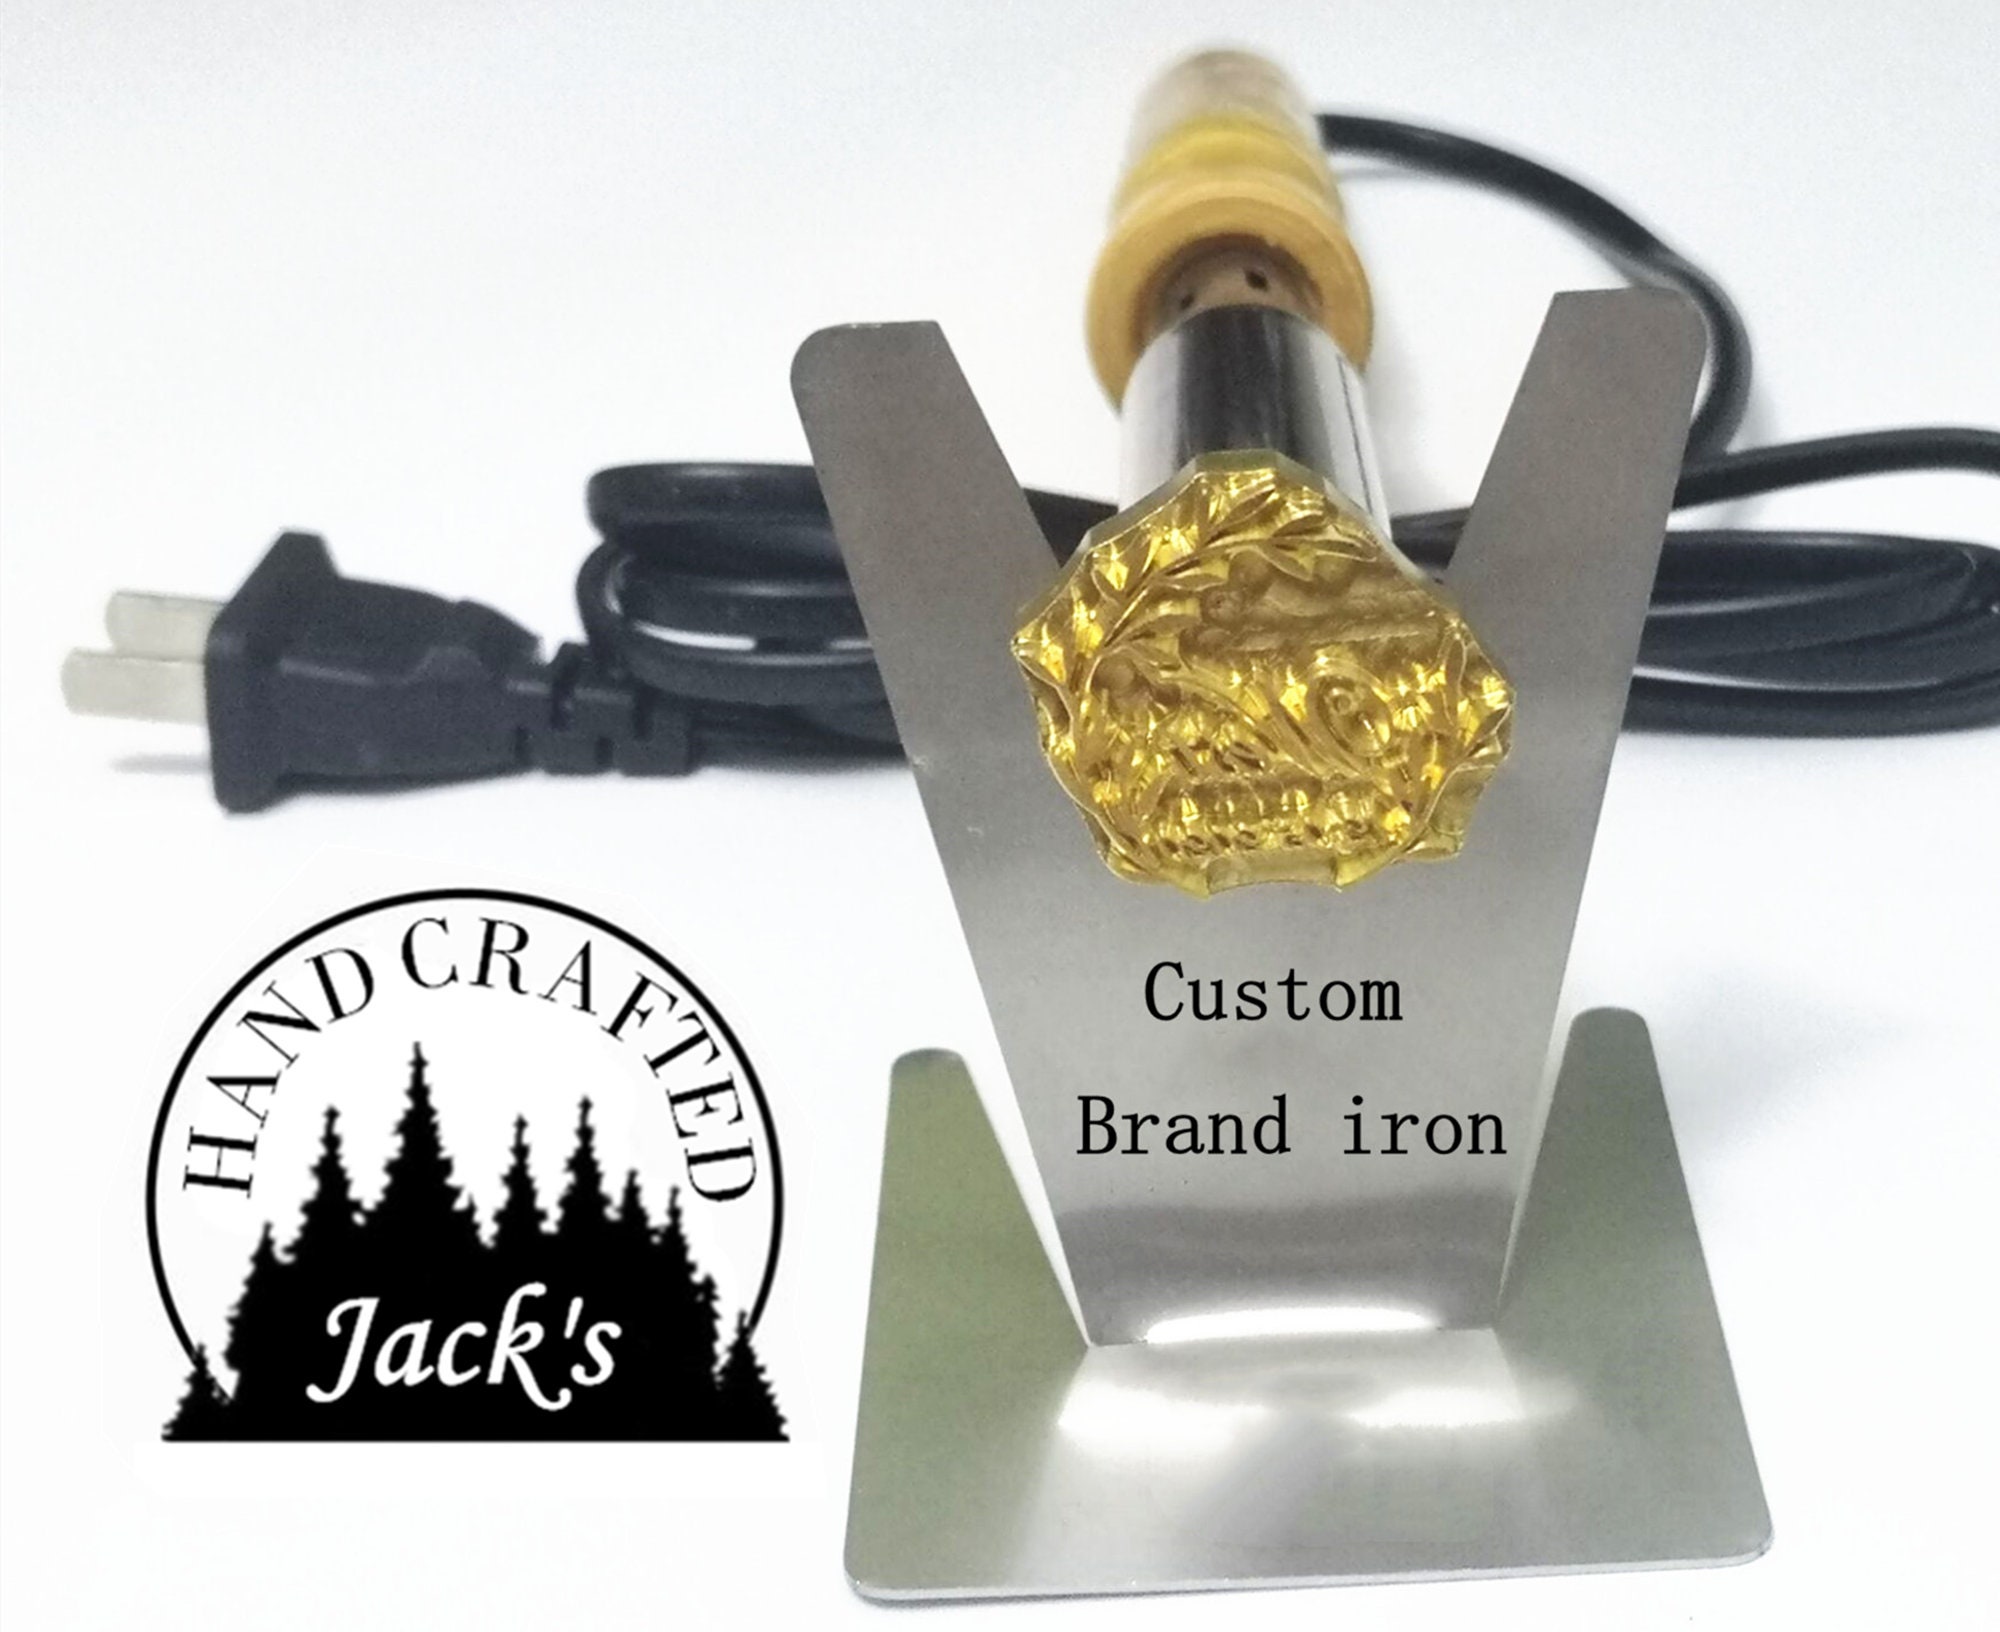  Custom Electric Wood Branding Iron with custom stamp 200W 110V  (1x1)